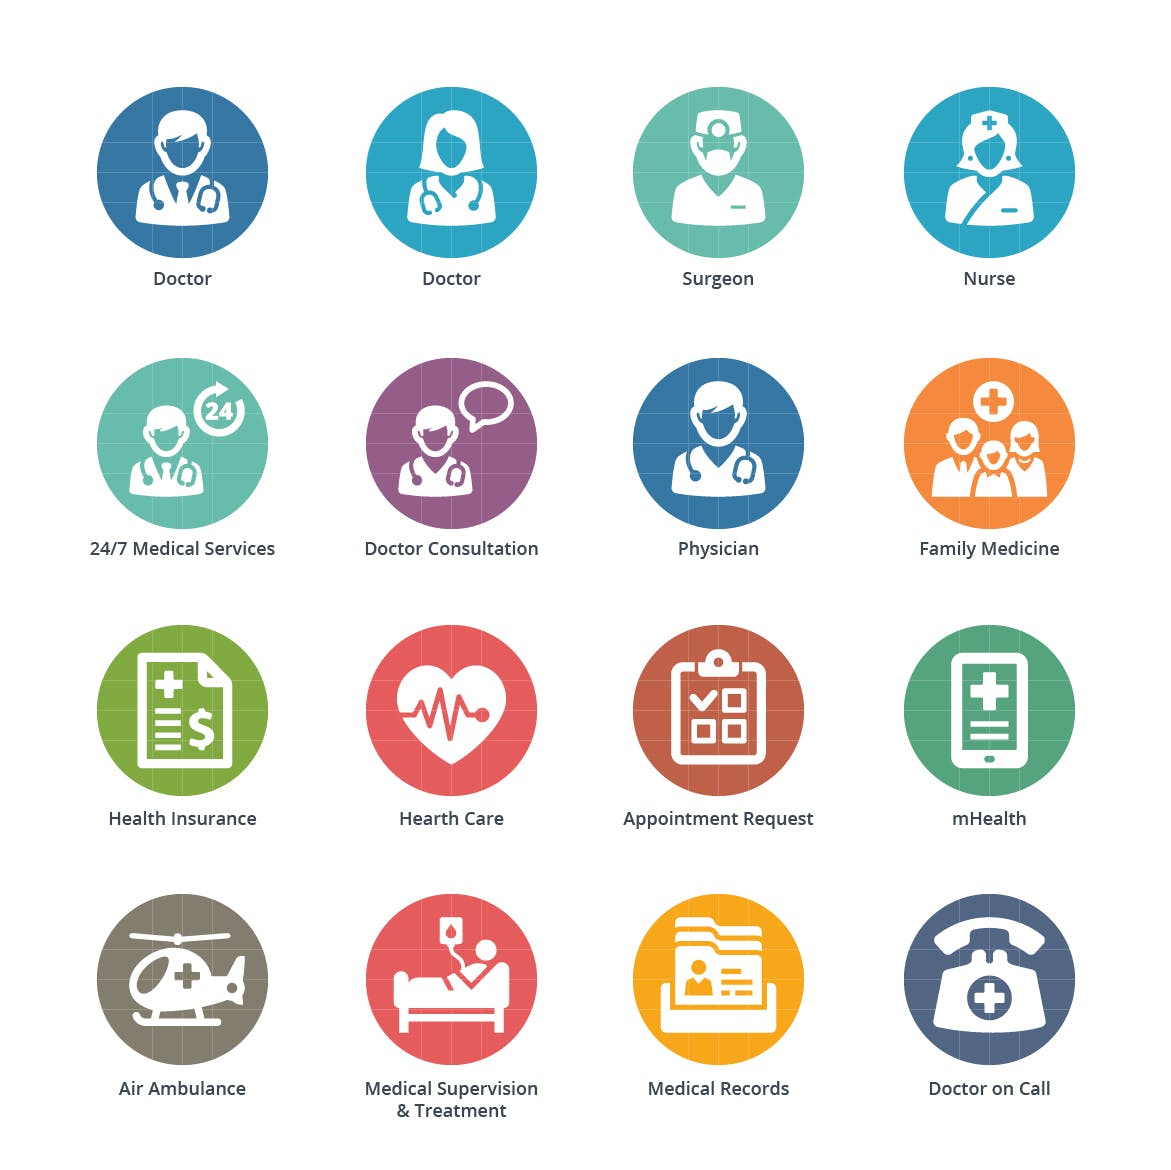 Sympa系列-医疗服务彩色蚂蚁素材精选图标集v1 Colored Medical Services Icons Set 1- Sympa Series插图(2)